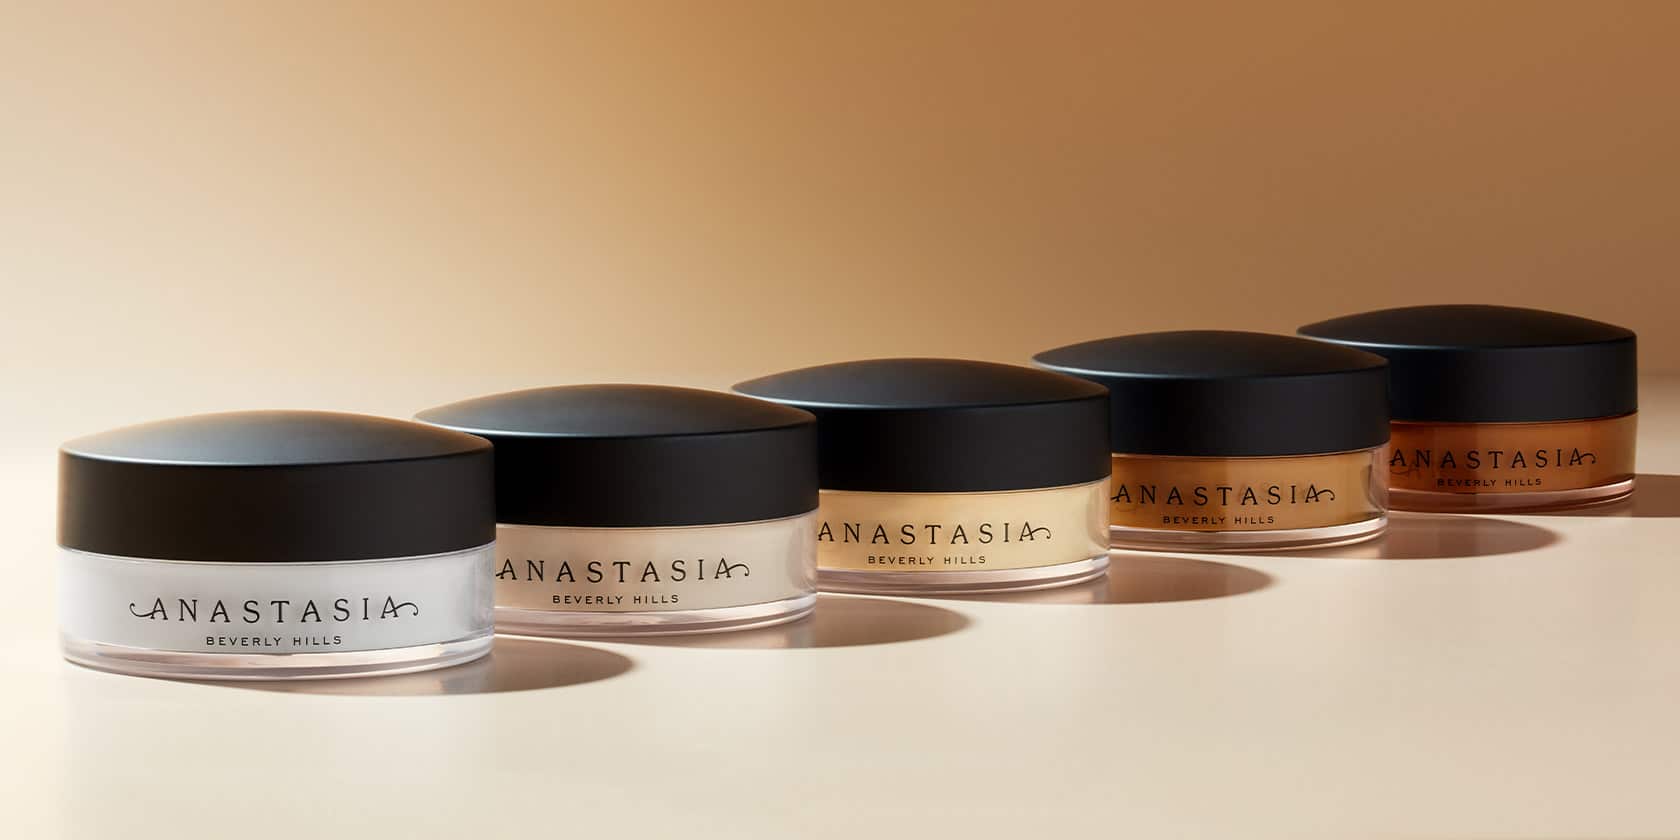 Anastasia Beverly Hills Brzoskwinia Beauty – Powder Setting Shop Loose 